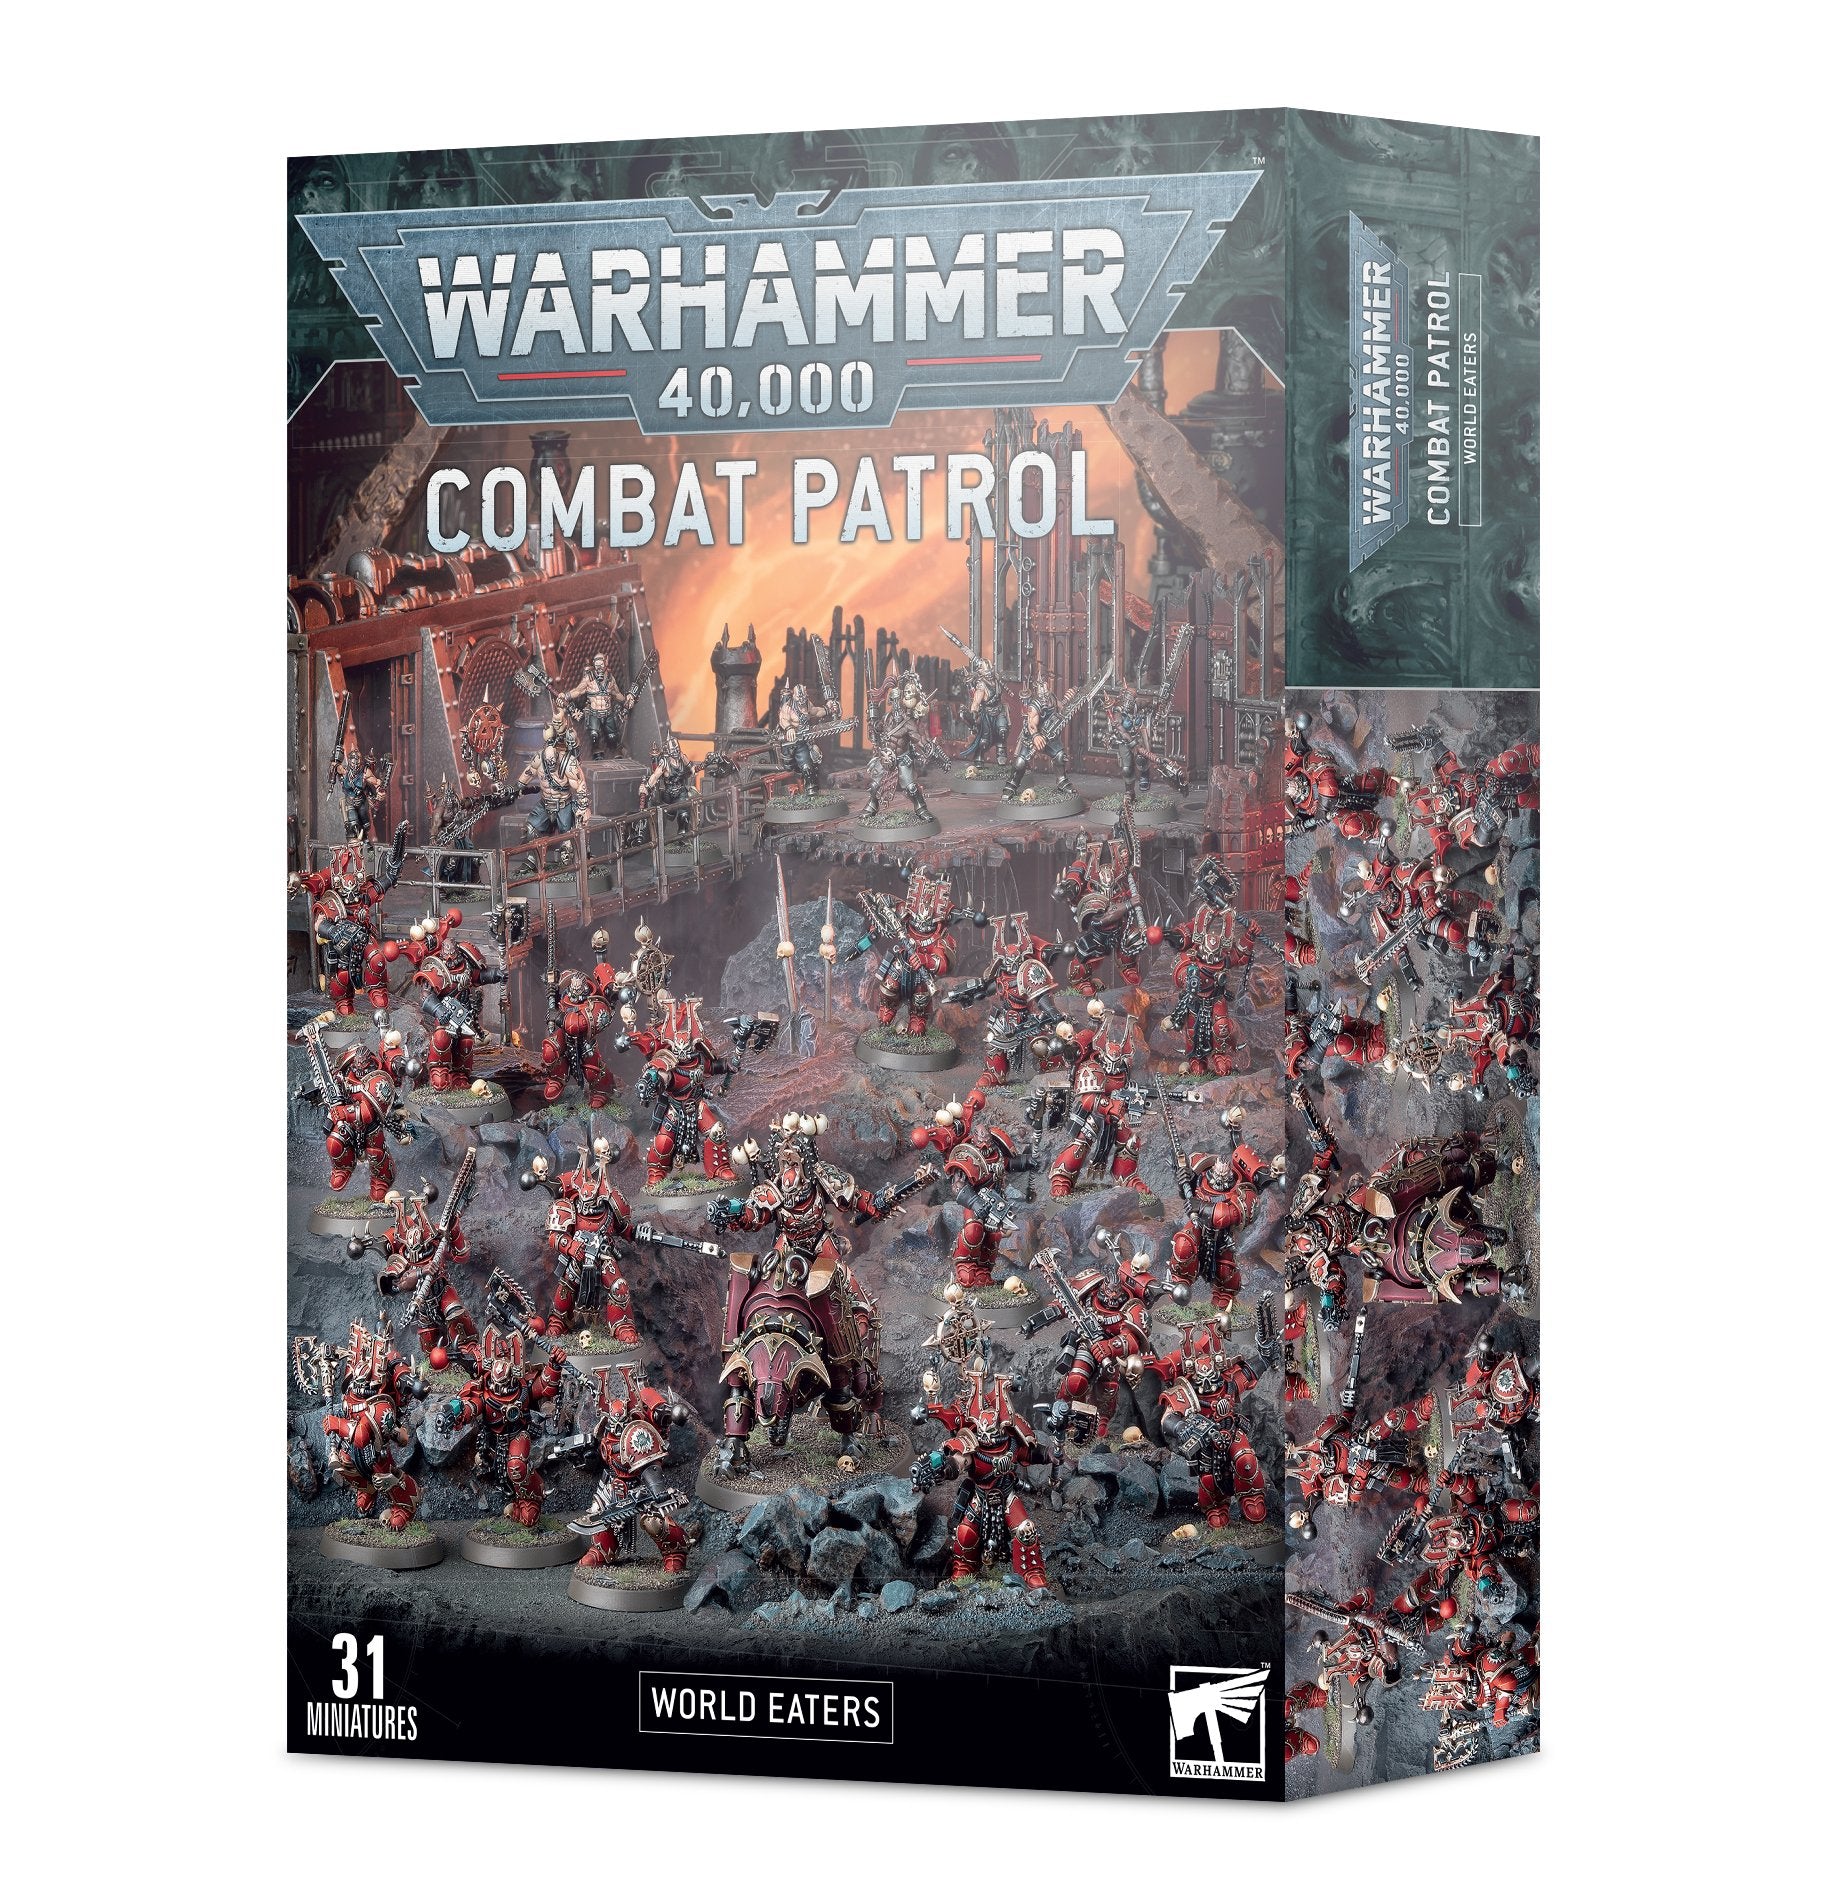 World-eaters-combat-patrol-warha,mmer-40K